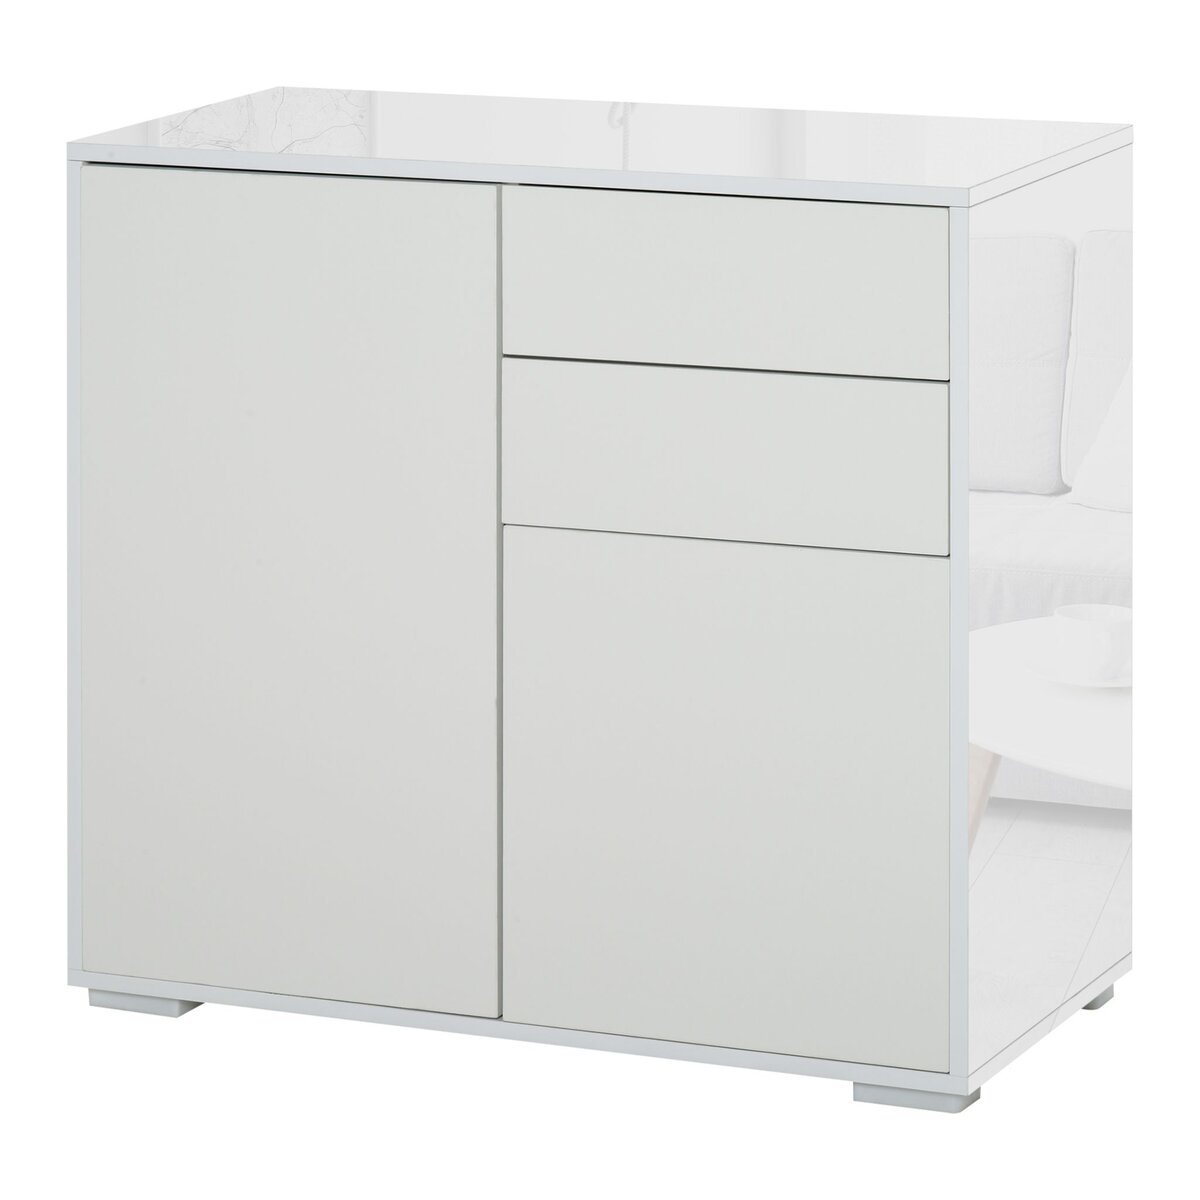 HOMCOM Commode buffet meuble de rangement 2 tiroirs 2 portes avec étagère 79 x 36 x 74 cm blanc